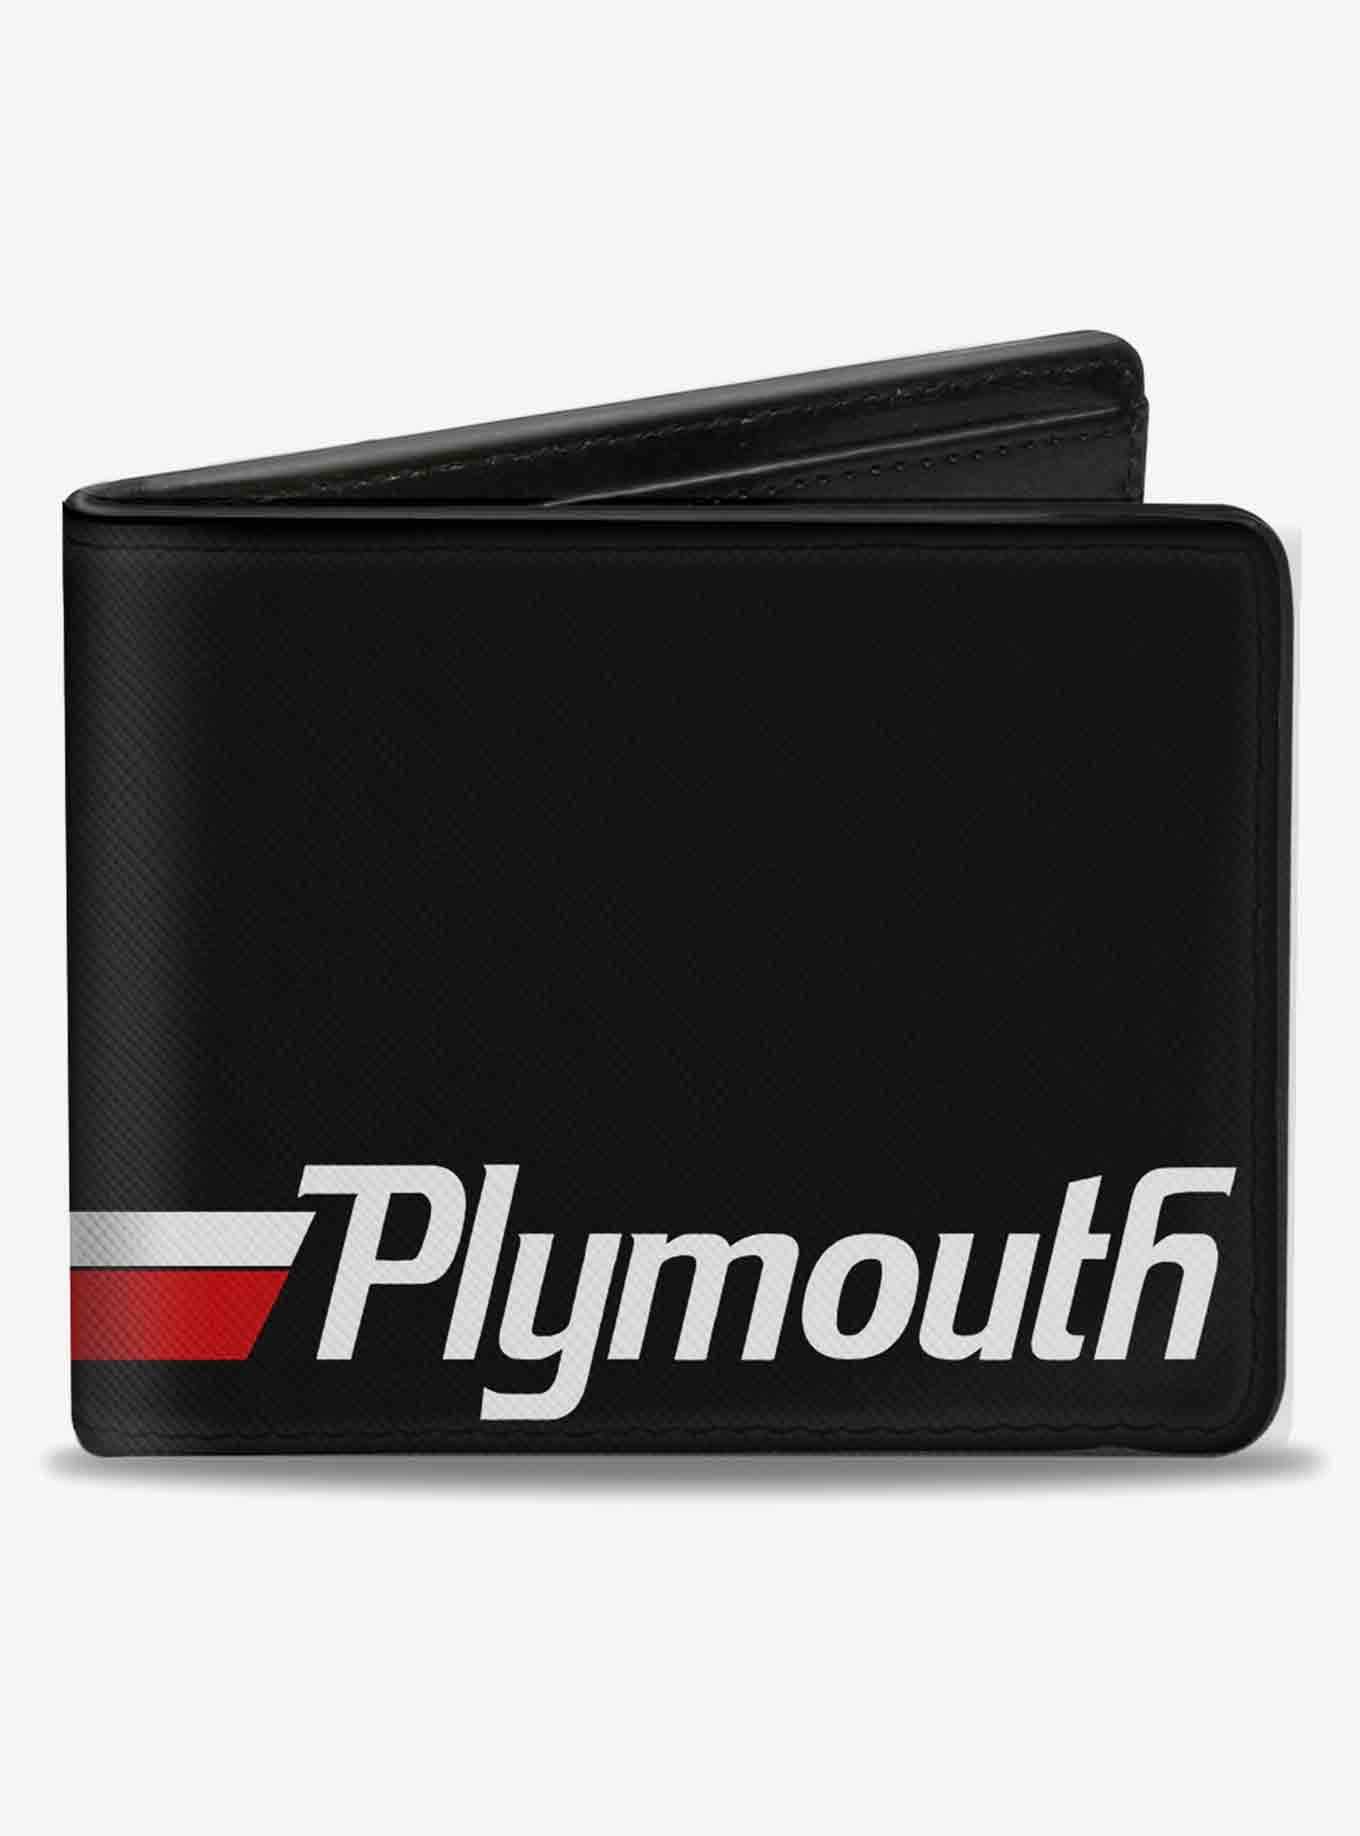 Plymouth Text Stripe Bifold Wallet, , hi-res